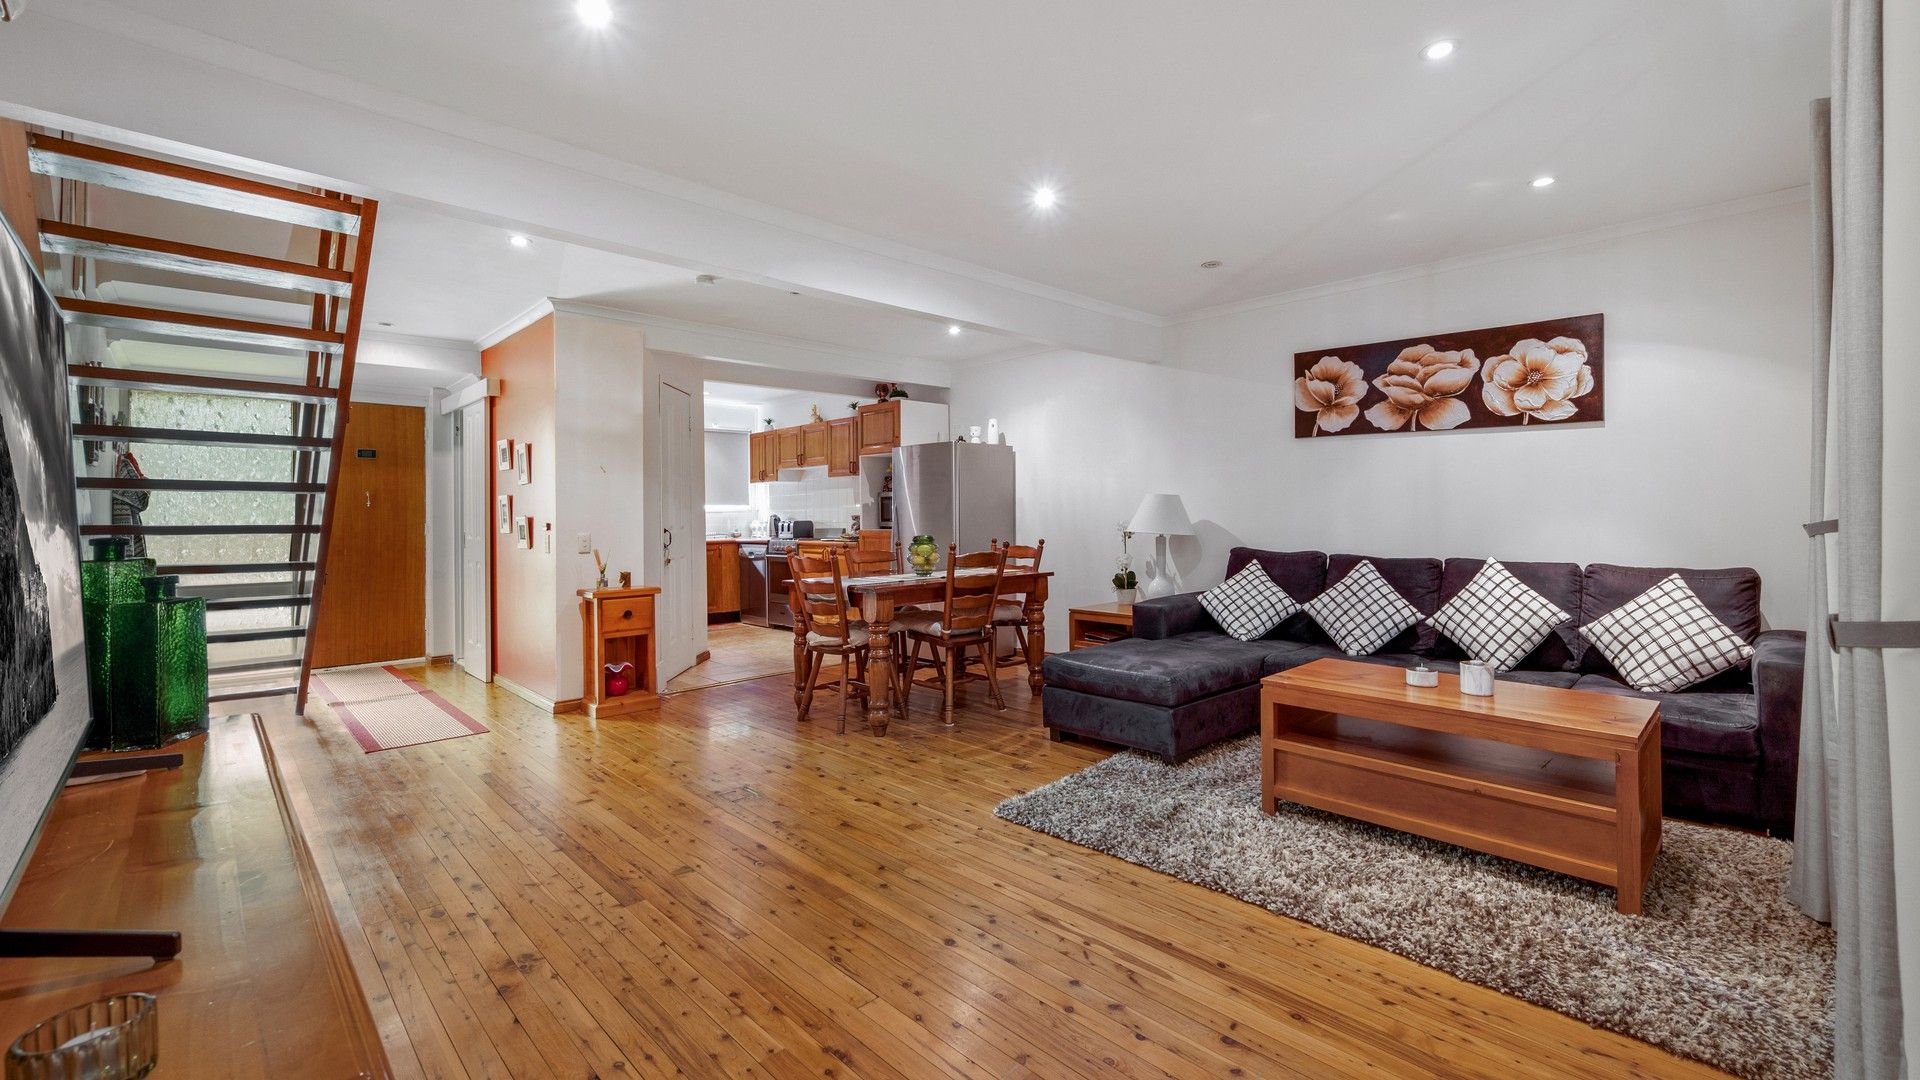 3 bedrooms House in 7/15 Brushbox Place BRADBURY NSW, 2560